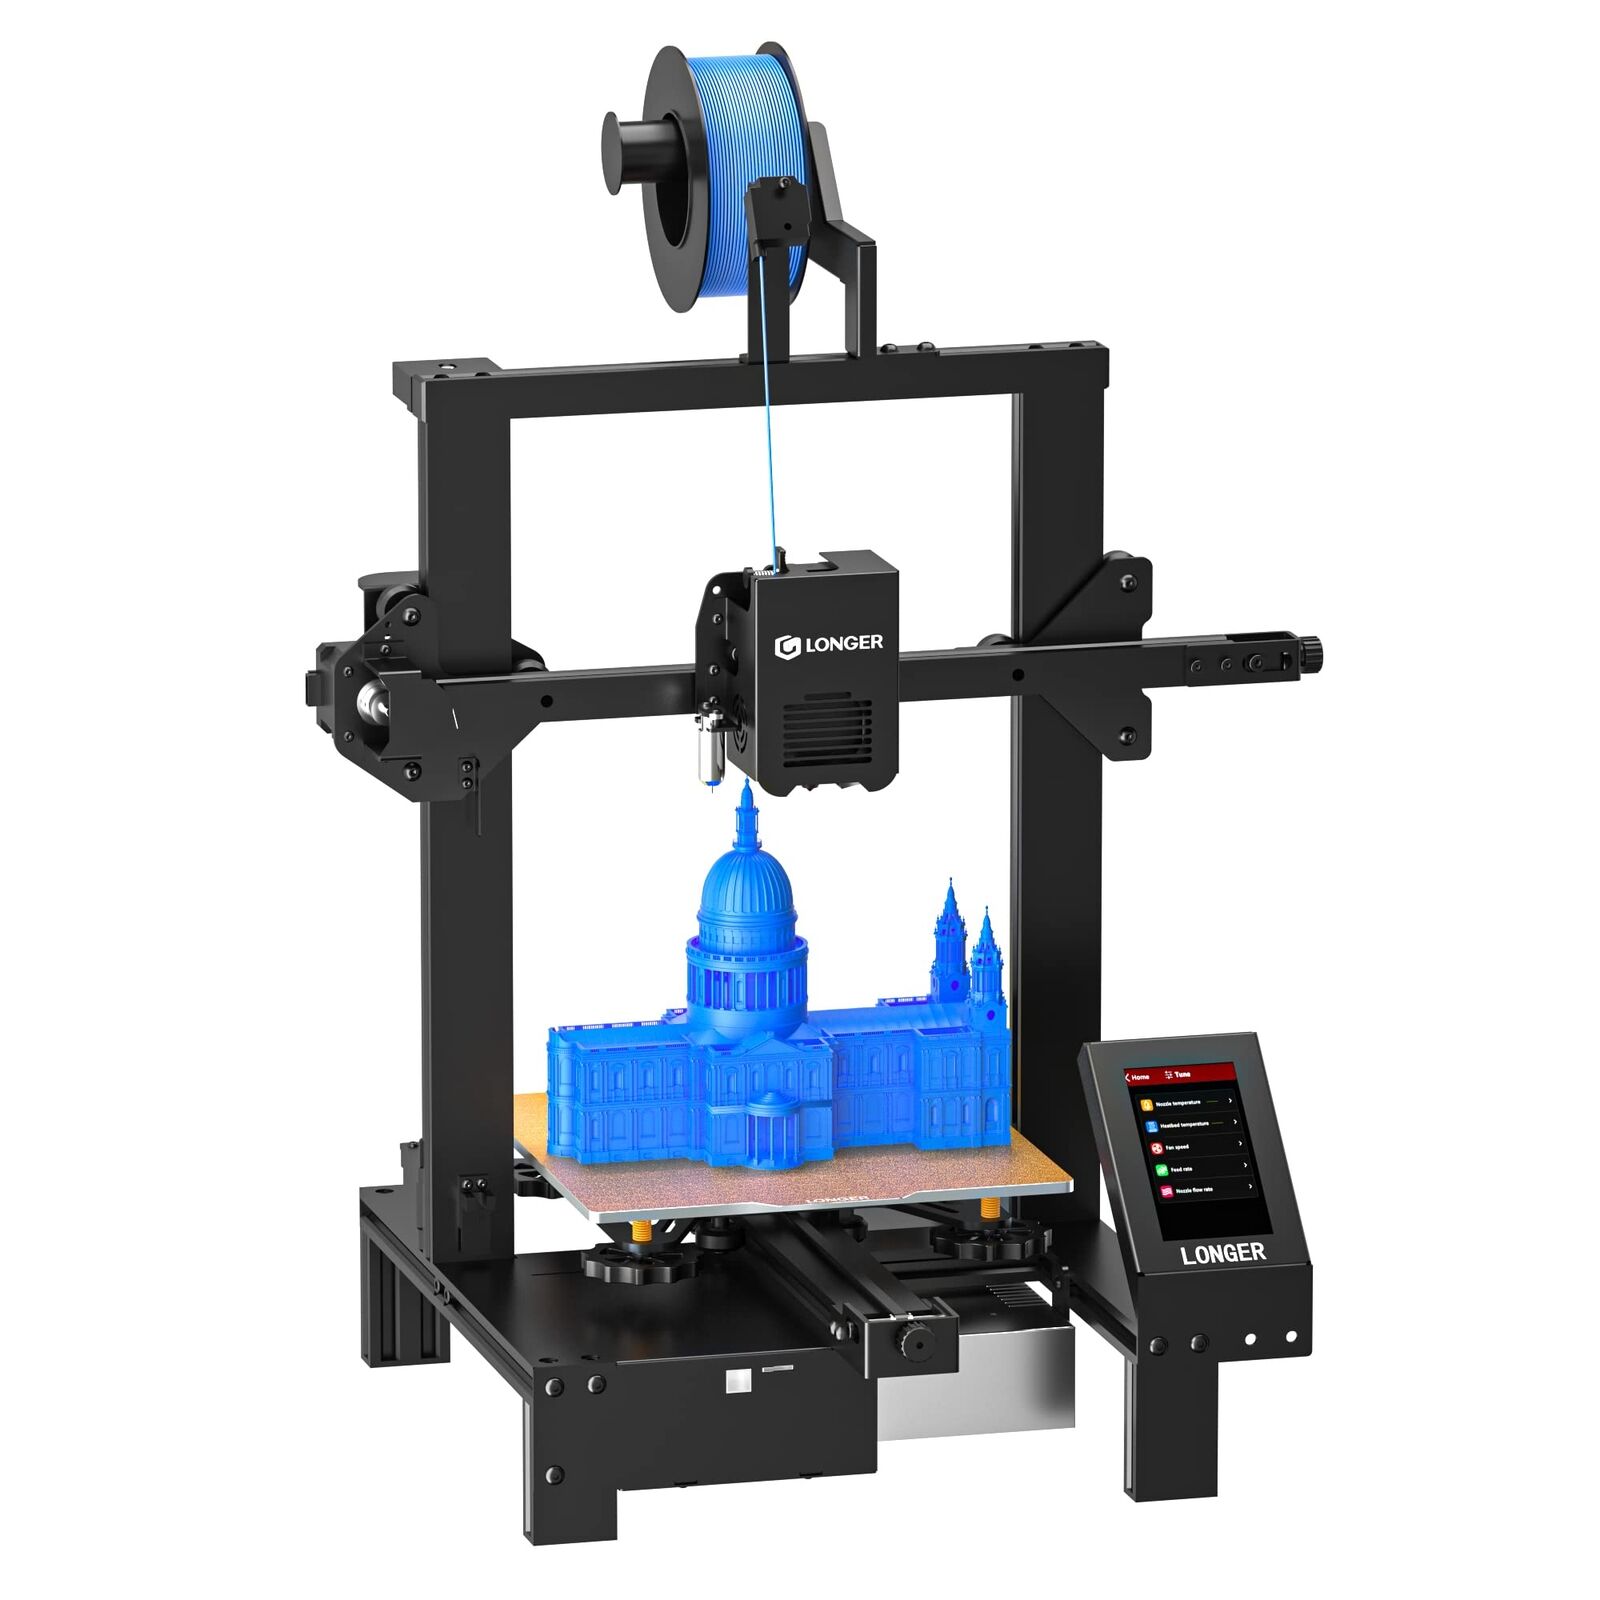 Longer LK4 X 3D Printer with 3D Touch Auto-Levelling, 95% Pre-Assembled